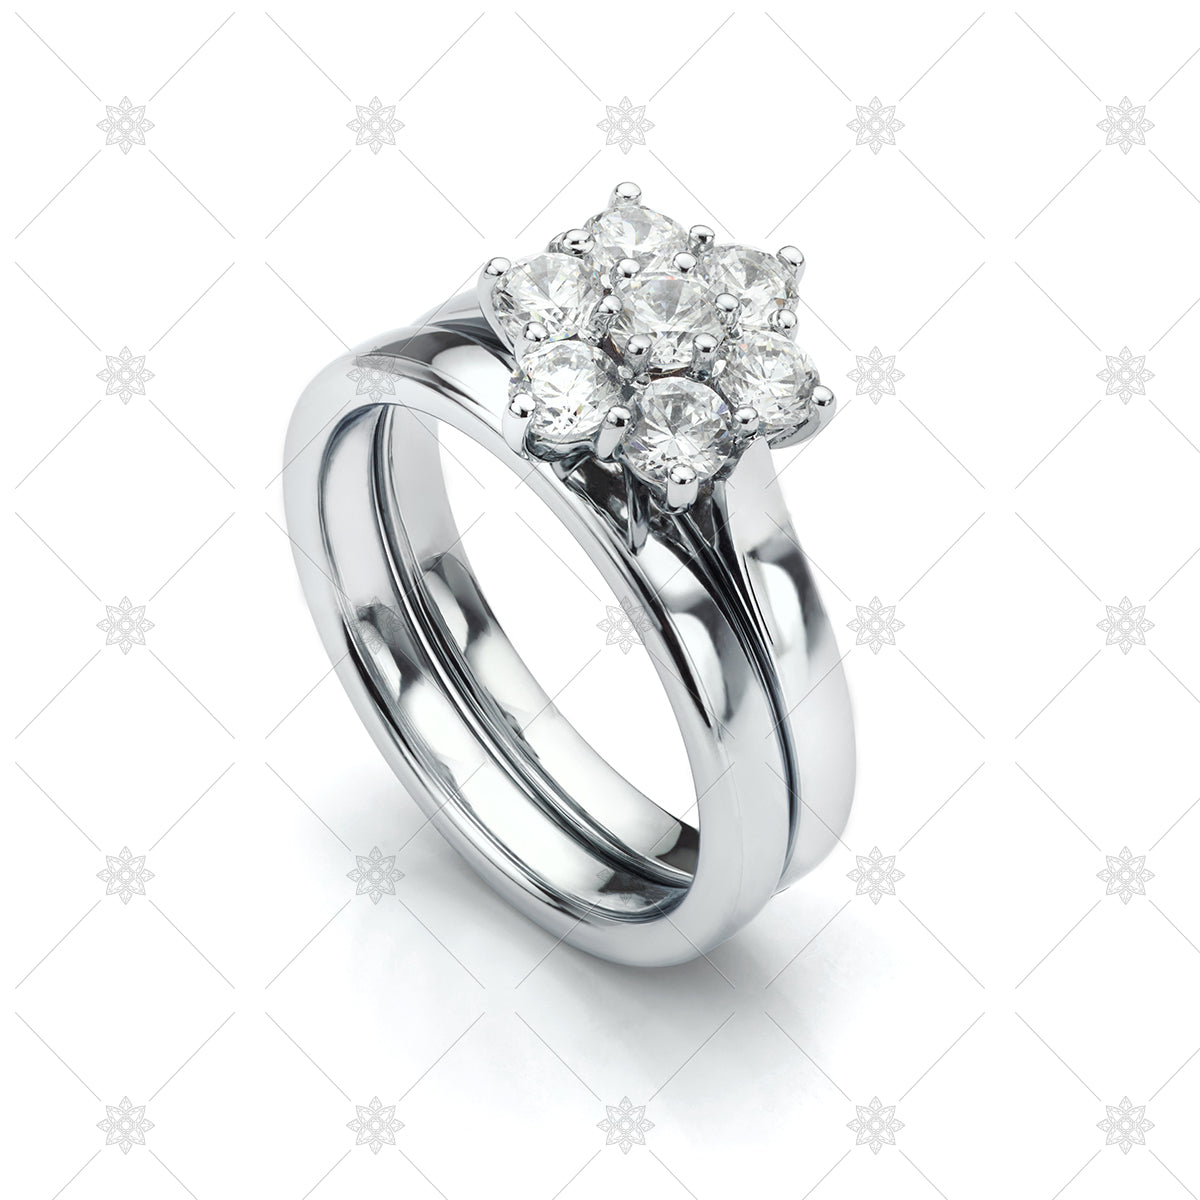 Engagement and wedding ring set image